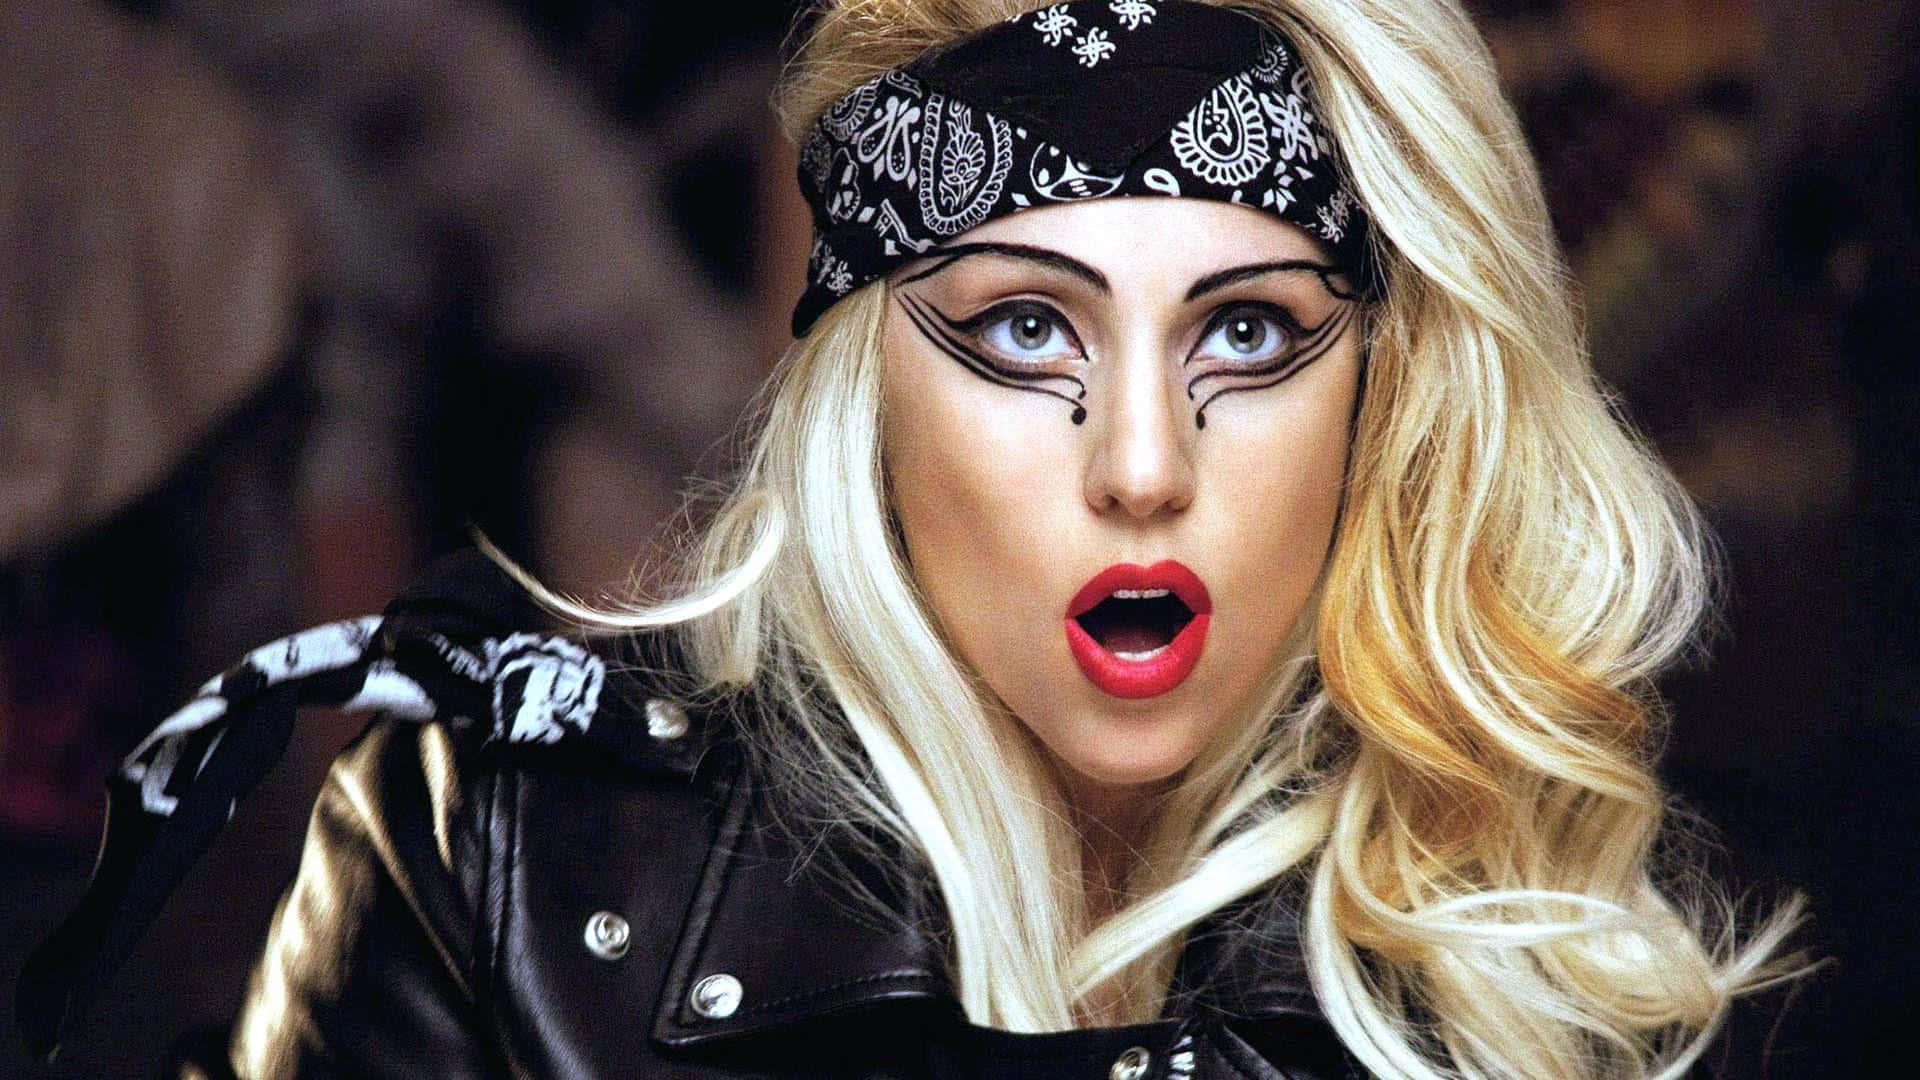 Lady Gaga performing her hit single